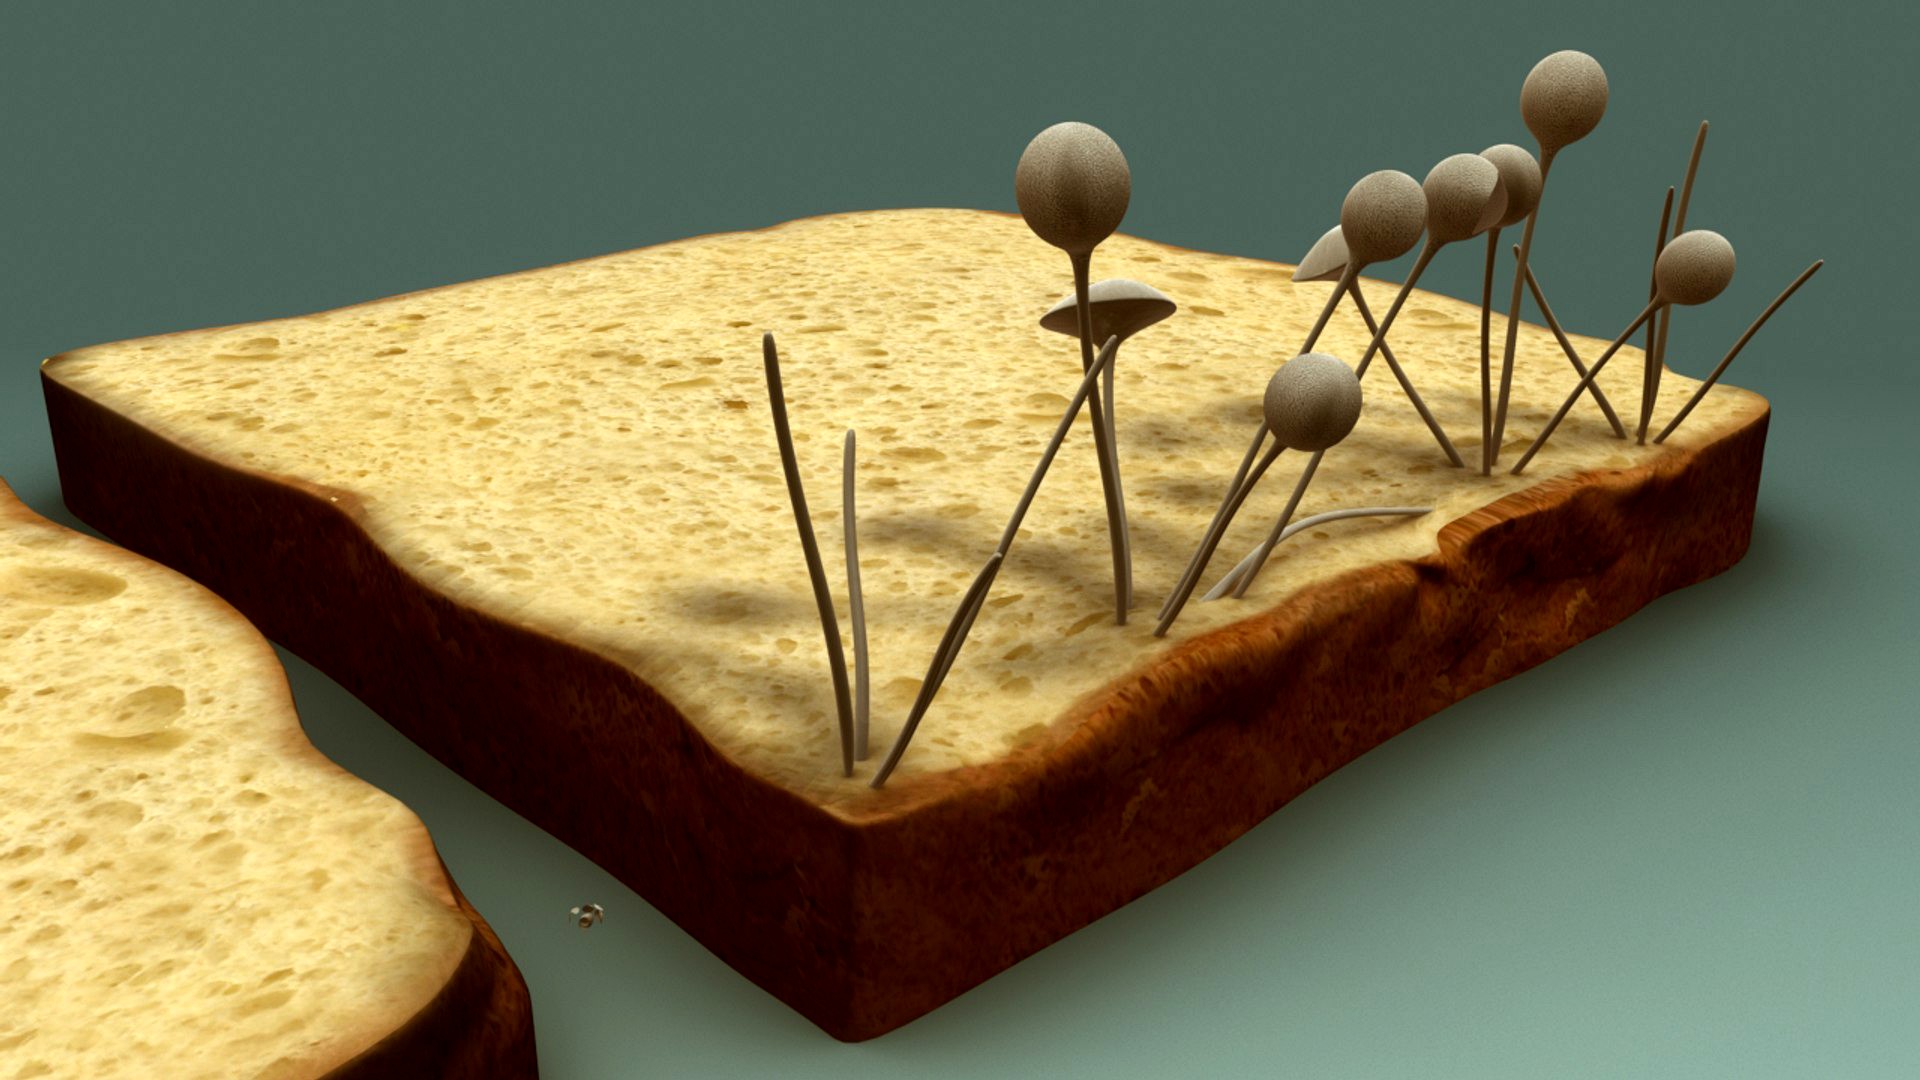 Fungus on bread